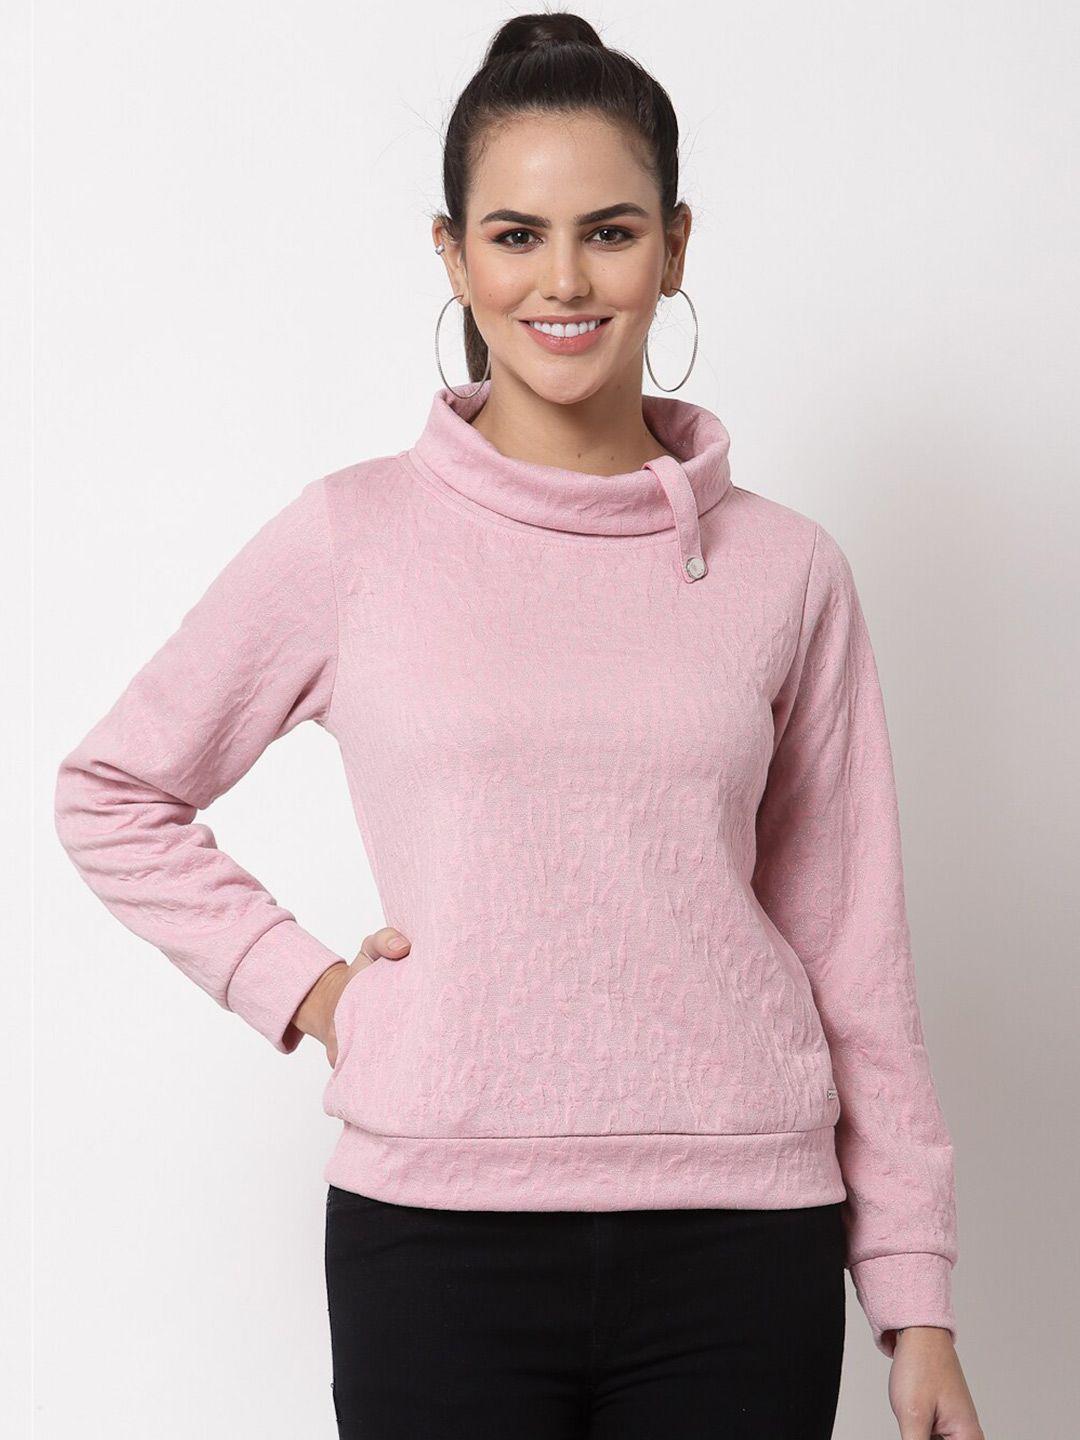 juelle-women-turtle-neck-pullover-fleece-sweatshirt